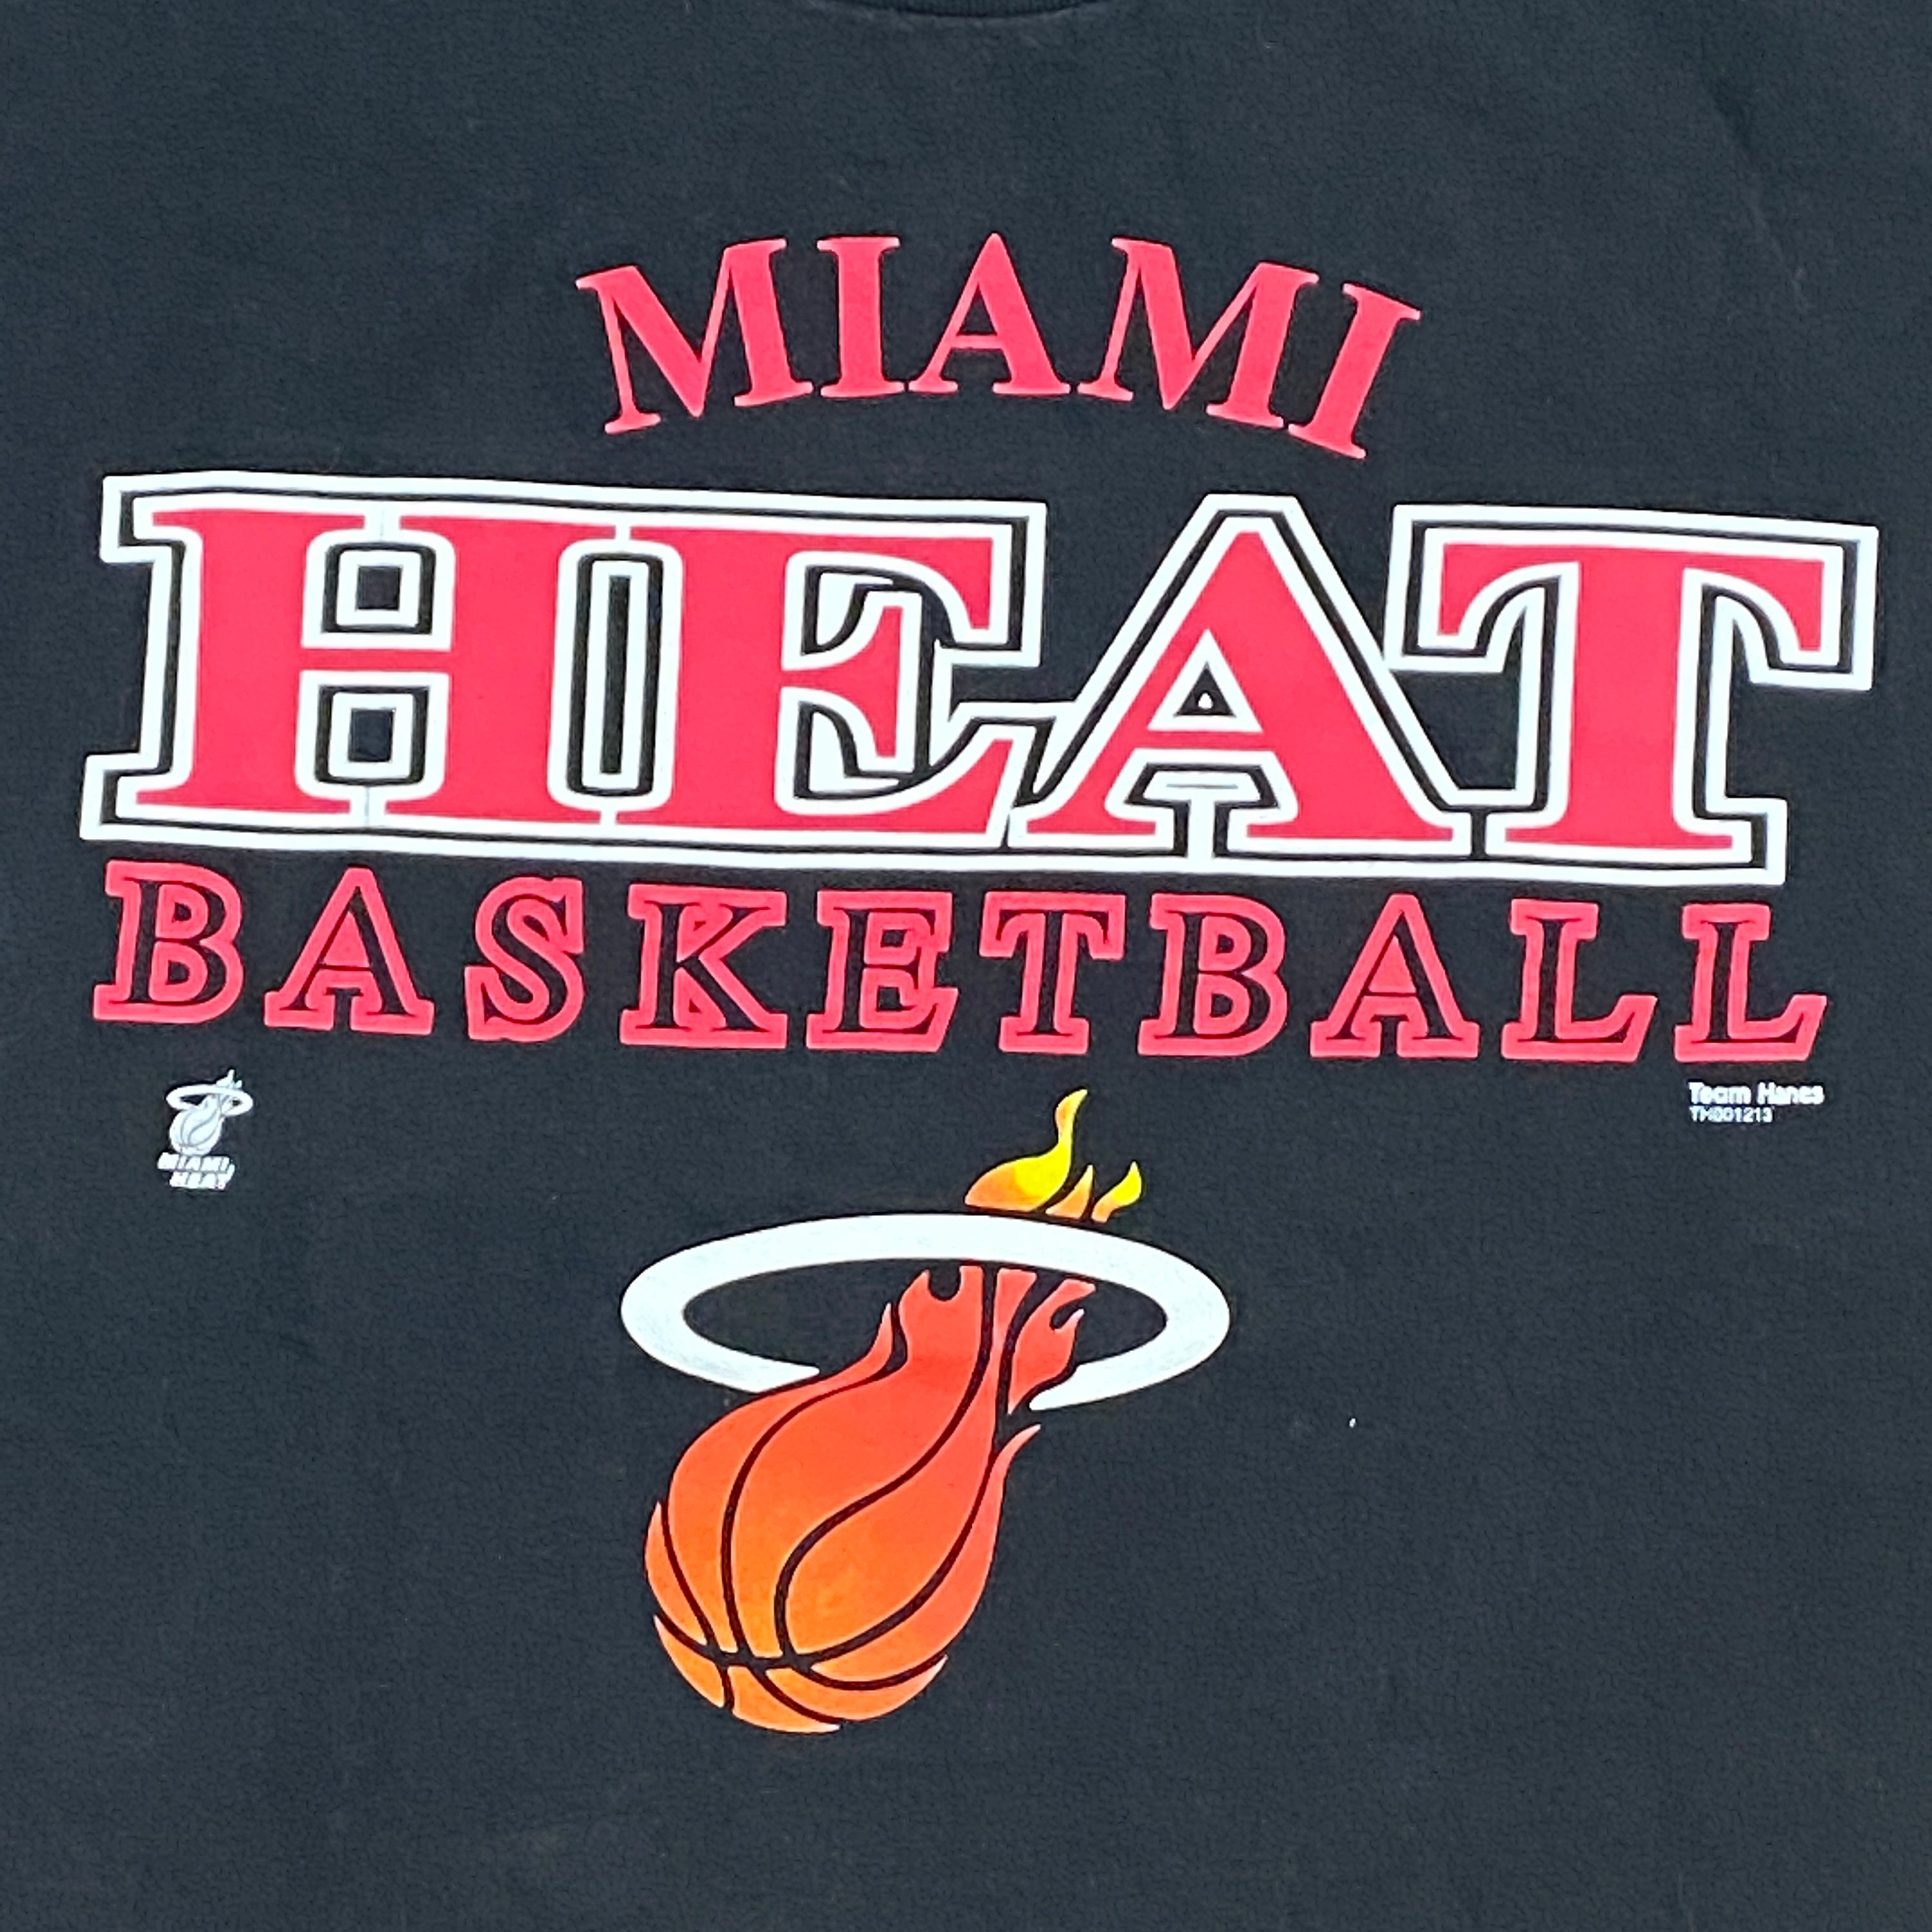 Pin by Glenda Solomon on Miami Heat  Miami heat, Dwyane wade, Joe johnson